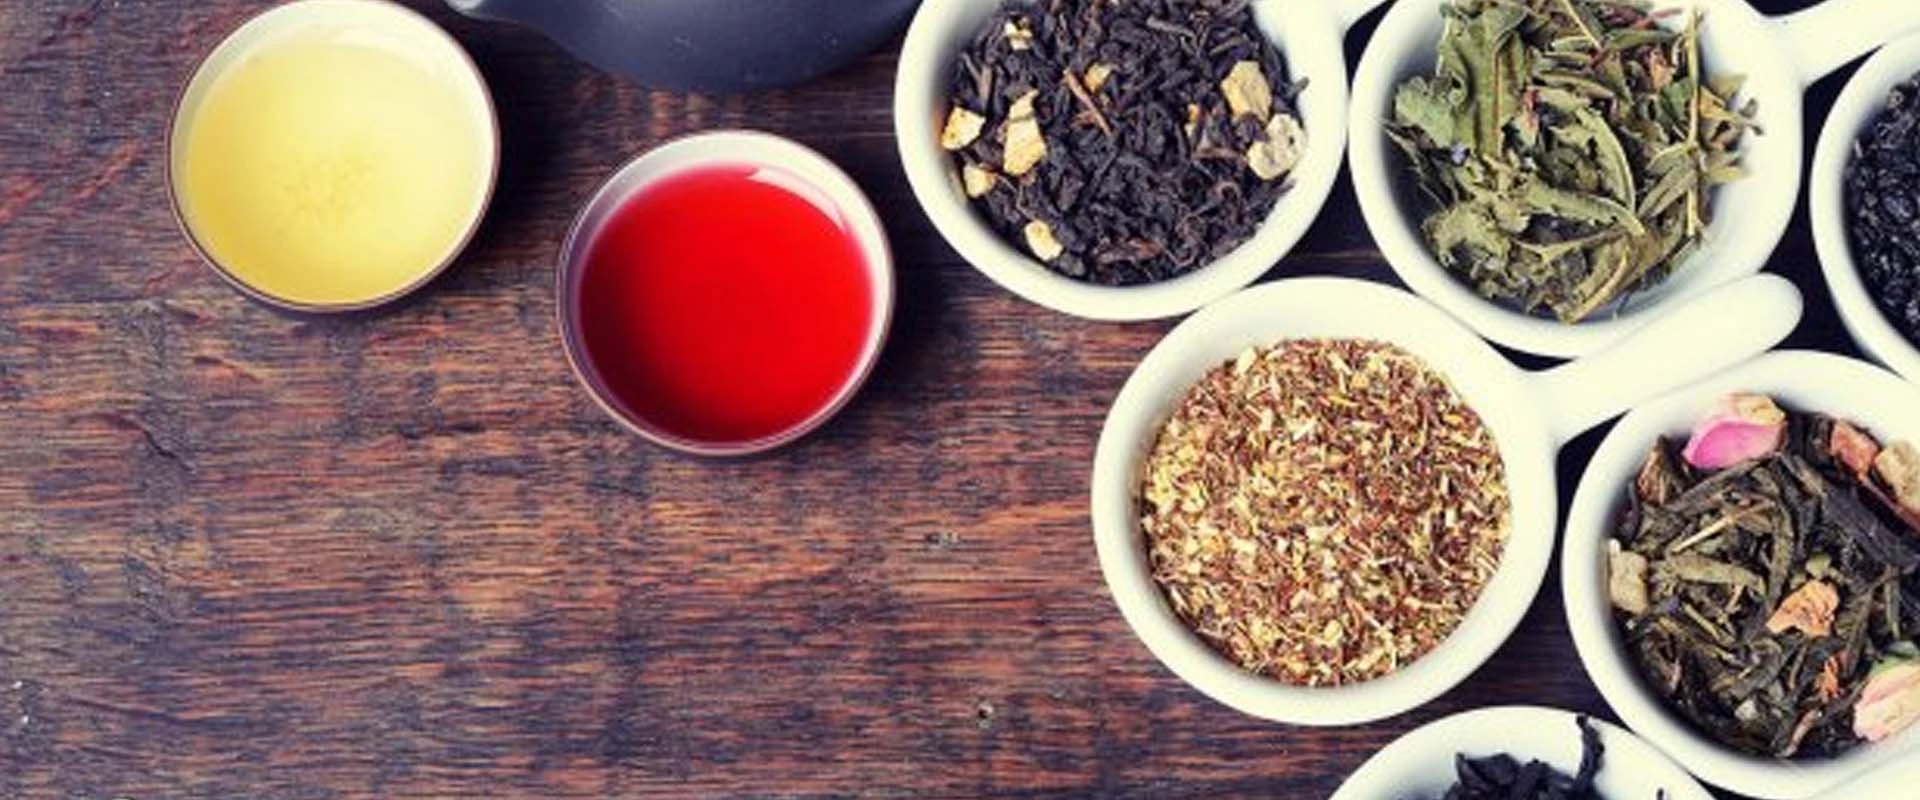 Ingredienti per tè e bevande, estratti istantanei